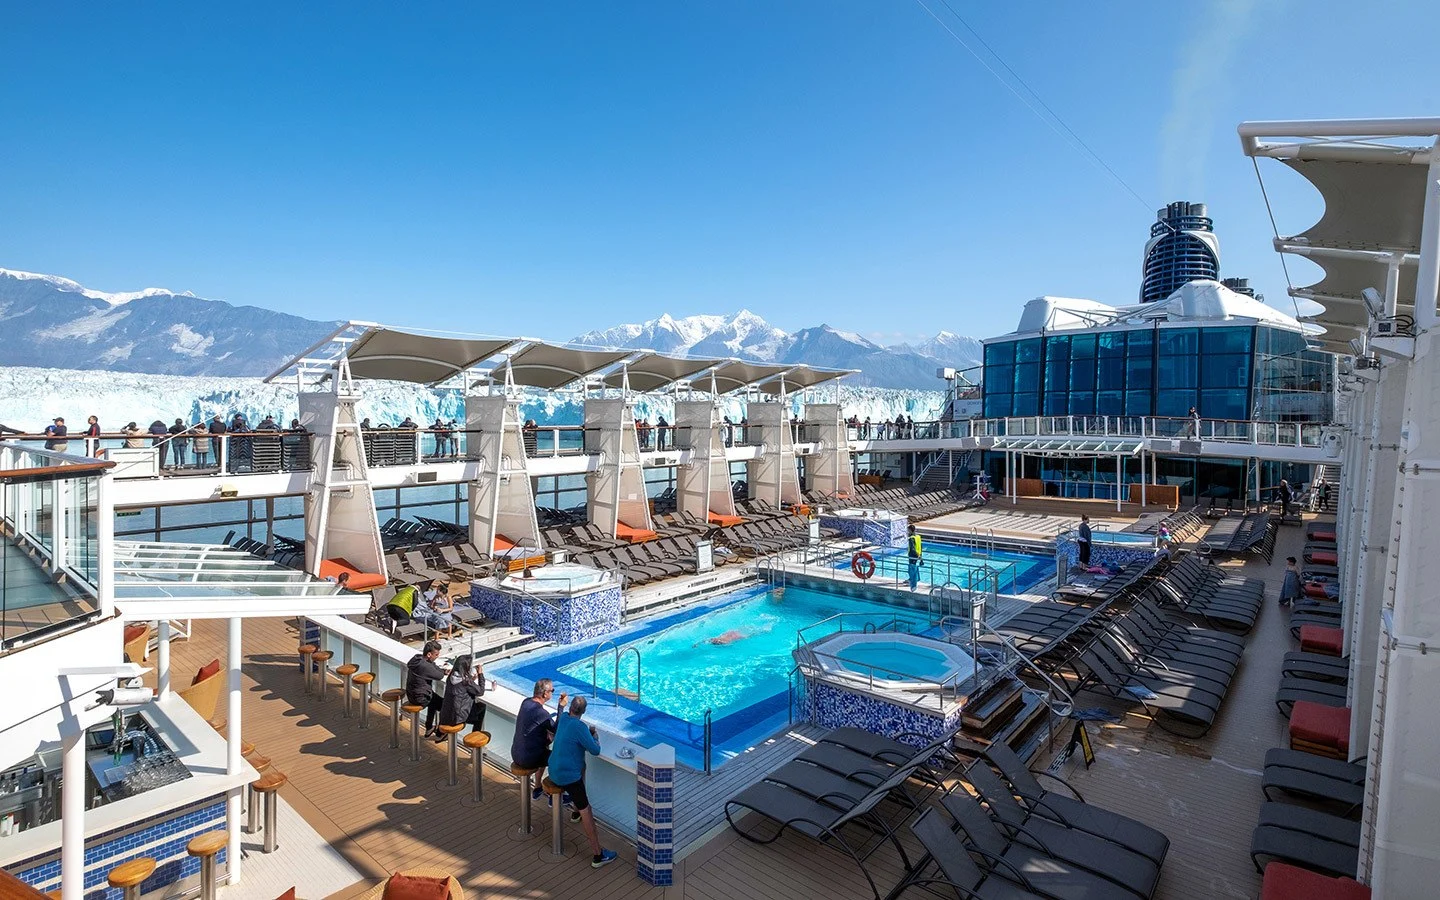 Pool on deck on an Alaska cruise